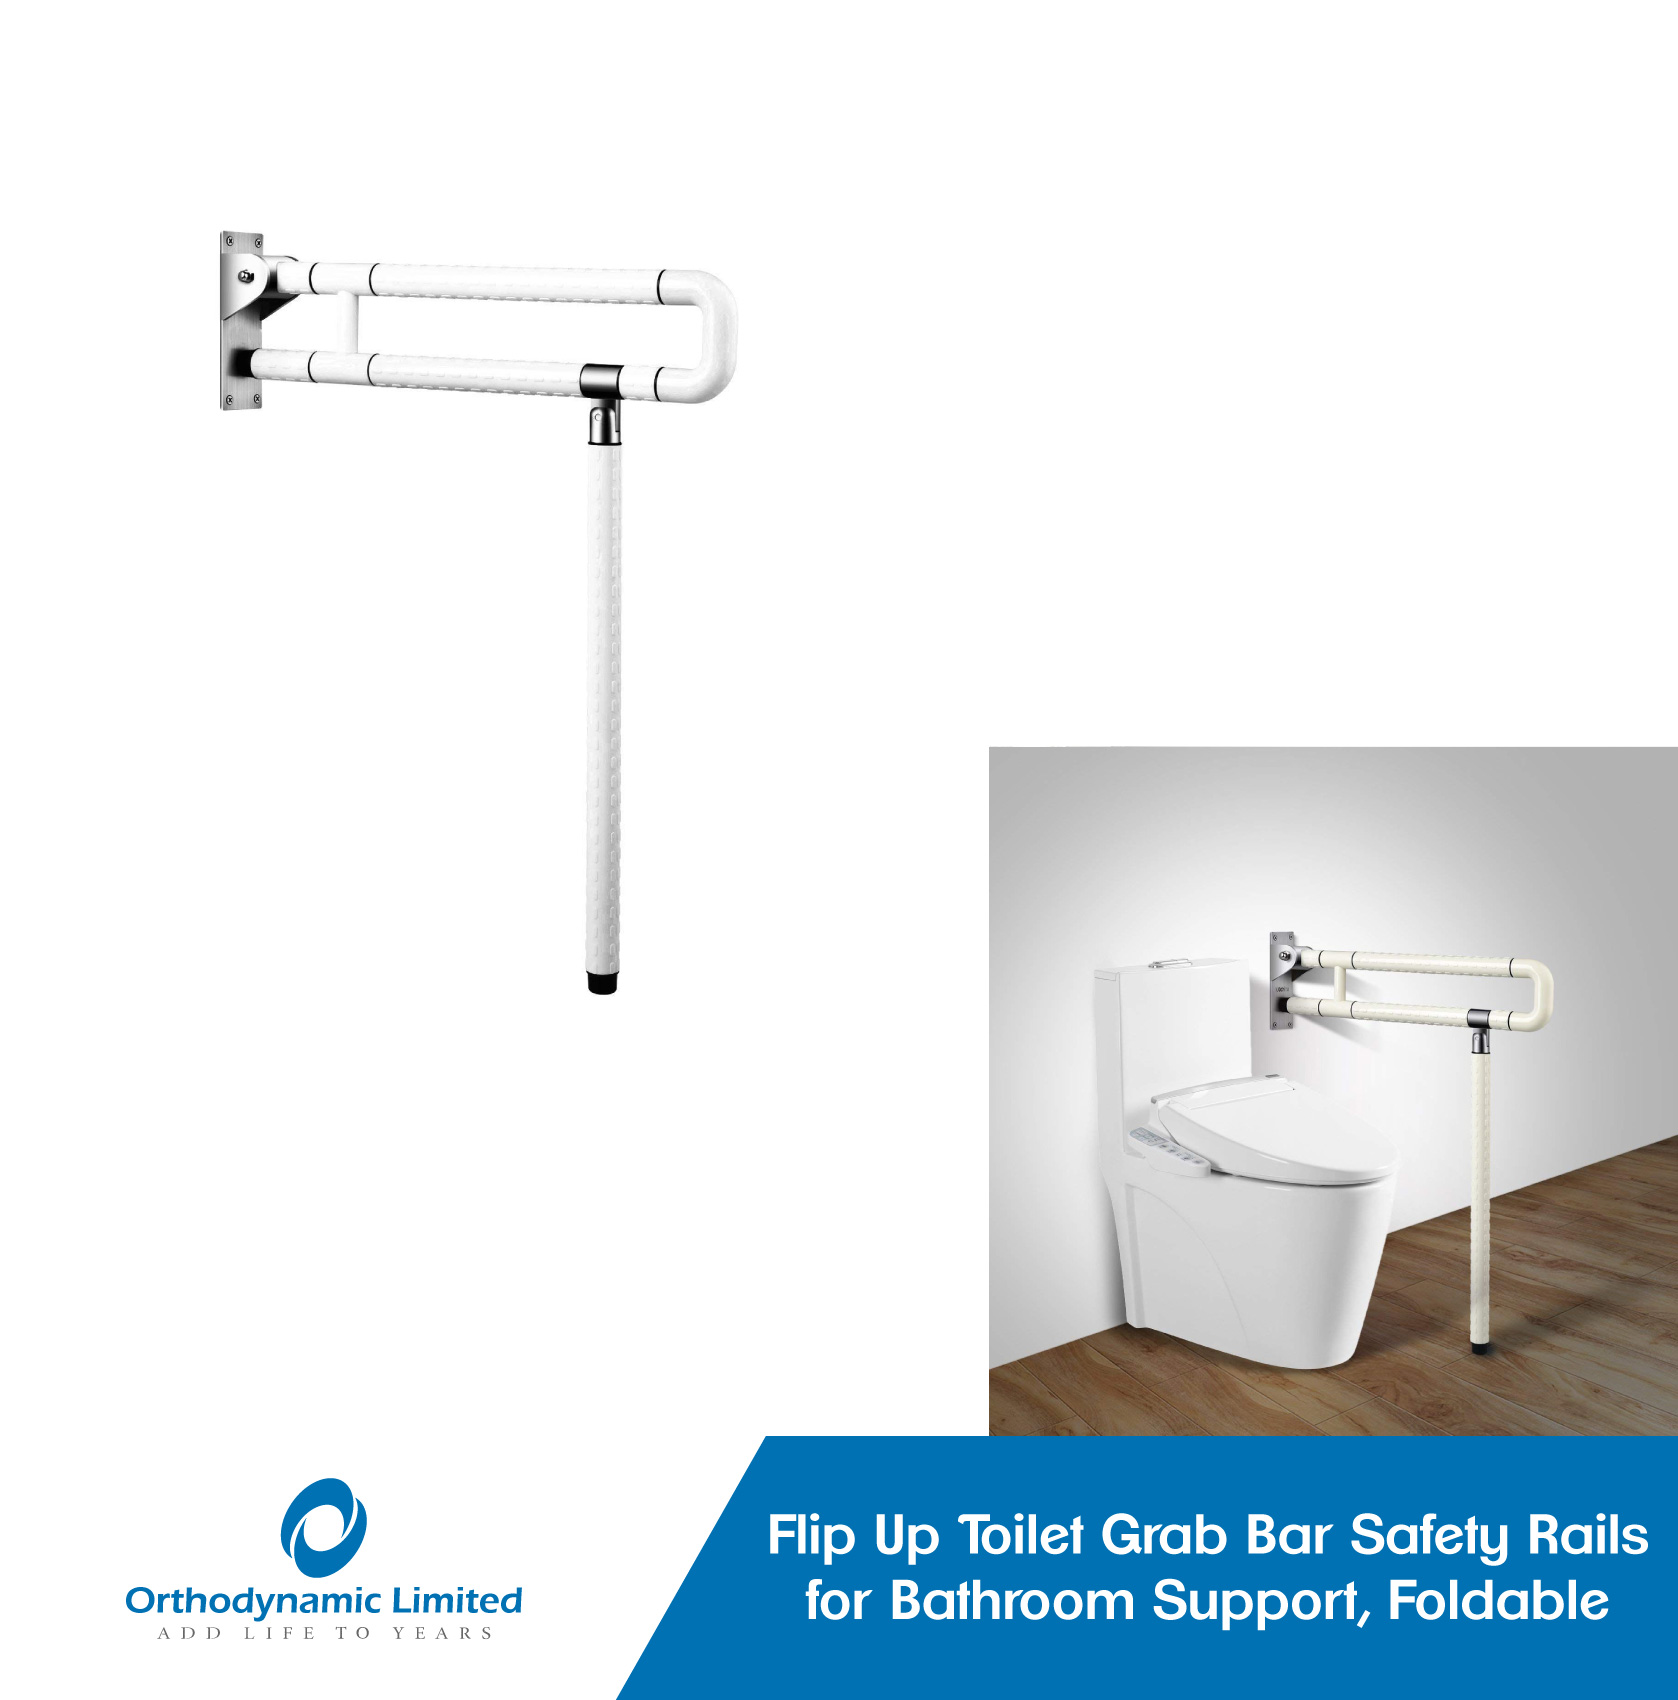 Foldable Flip toilet grab bar safety rail for bathroom support